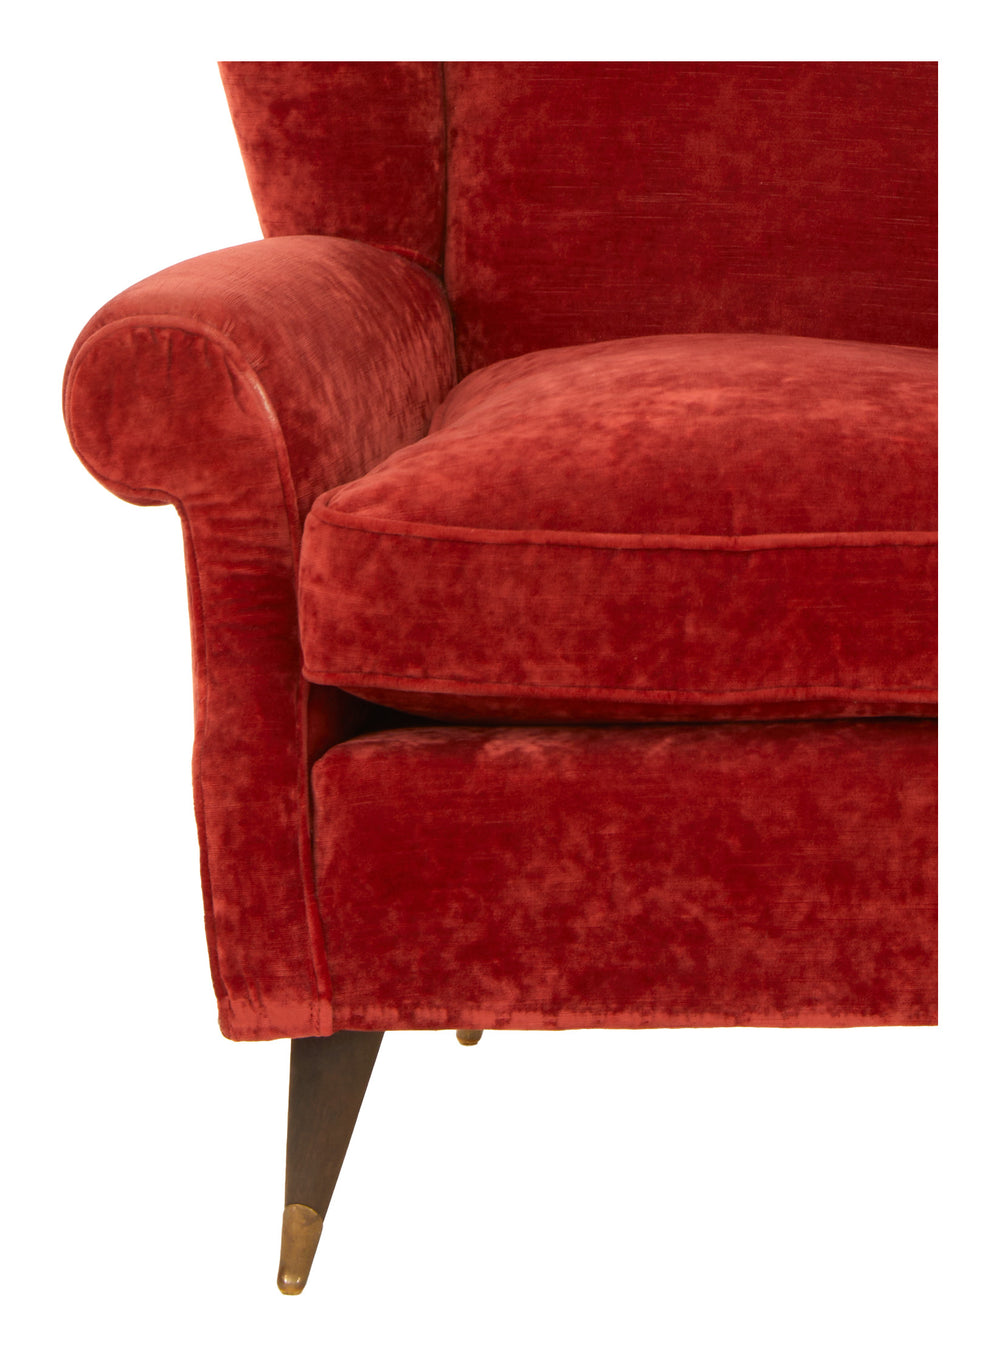 Vintage Red Velvet Wing Chair